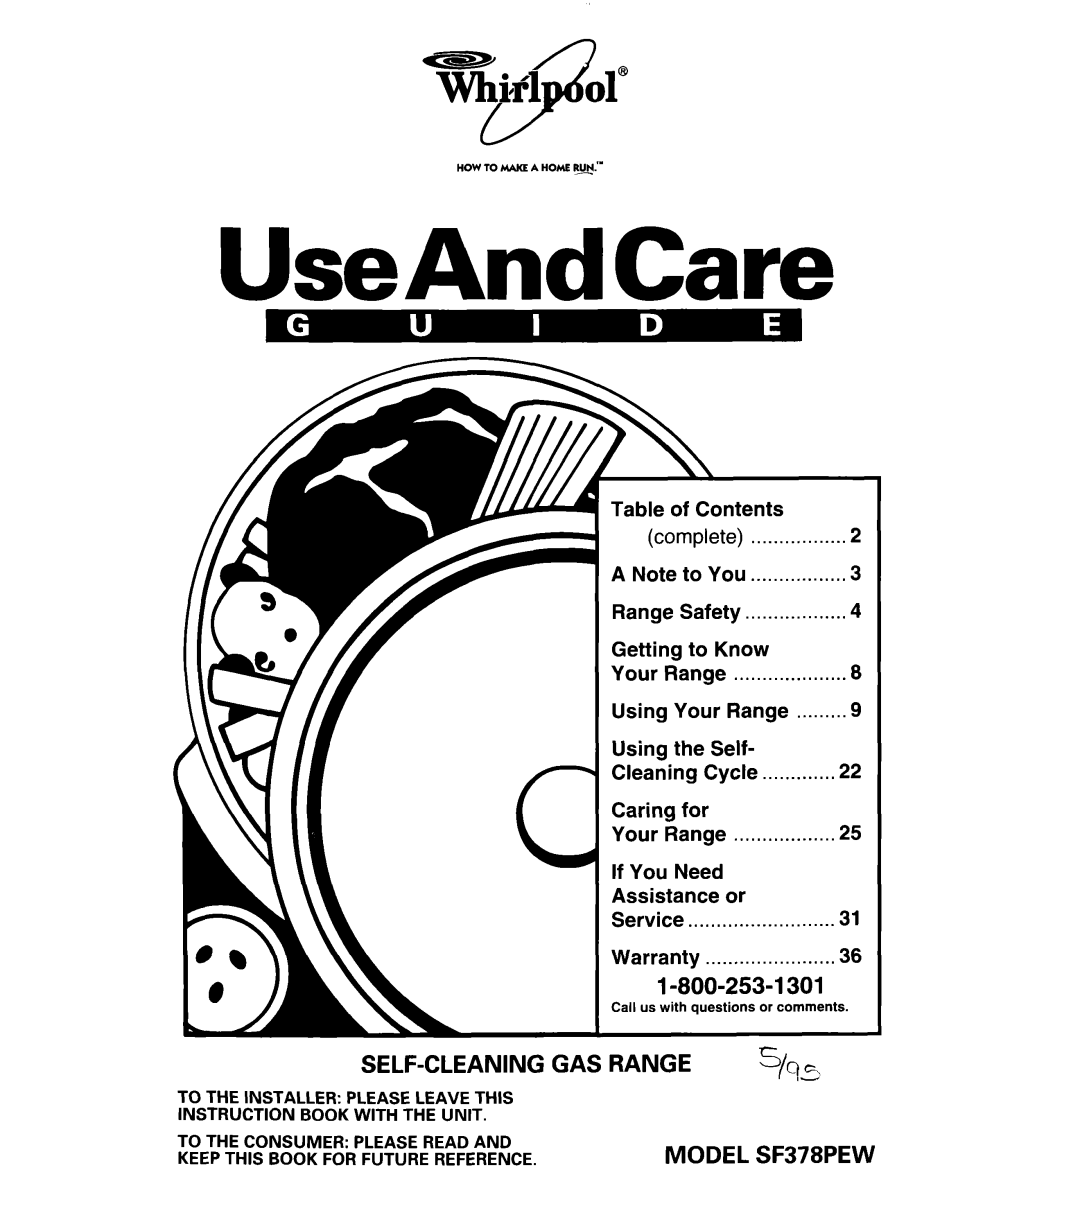 Whirlpool warranty UseAndCare, 1-800-253-I301, GAS RANGE MODEL SF378PEW, Self-Cleaning 